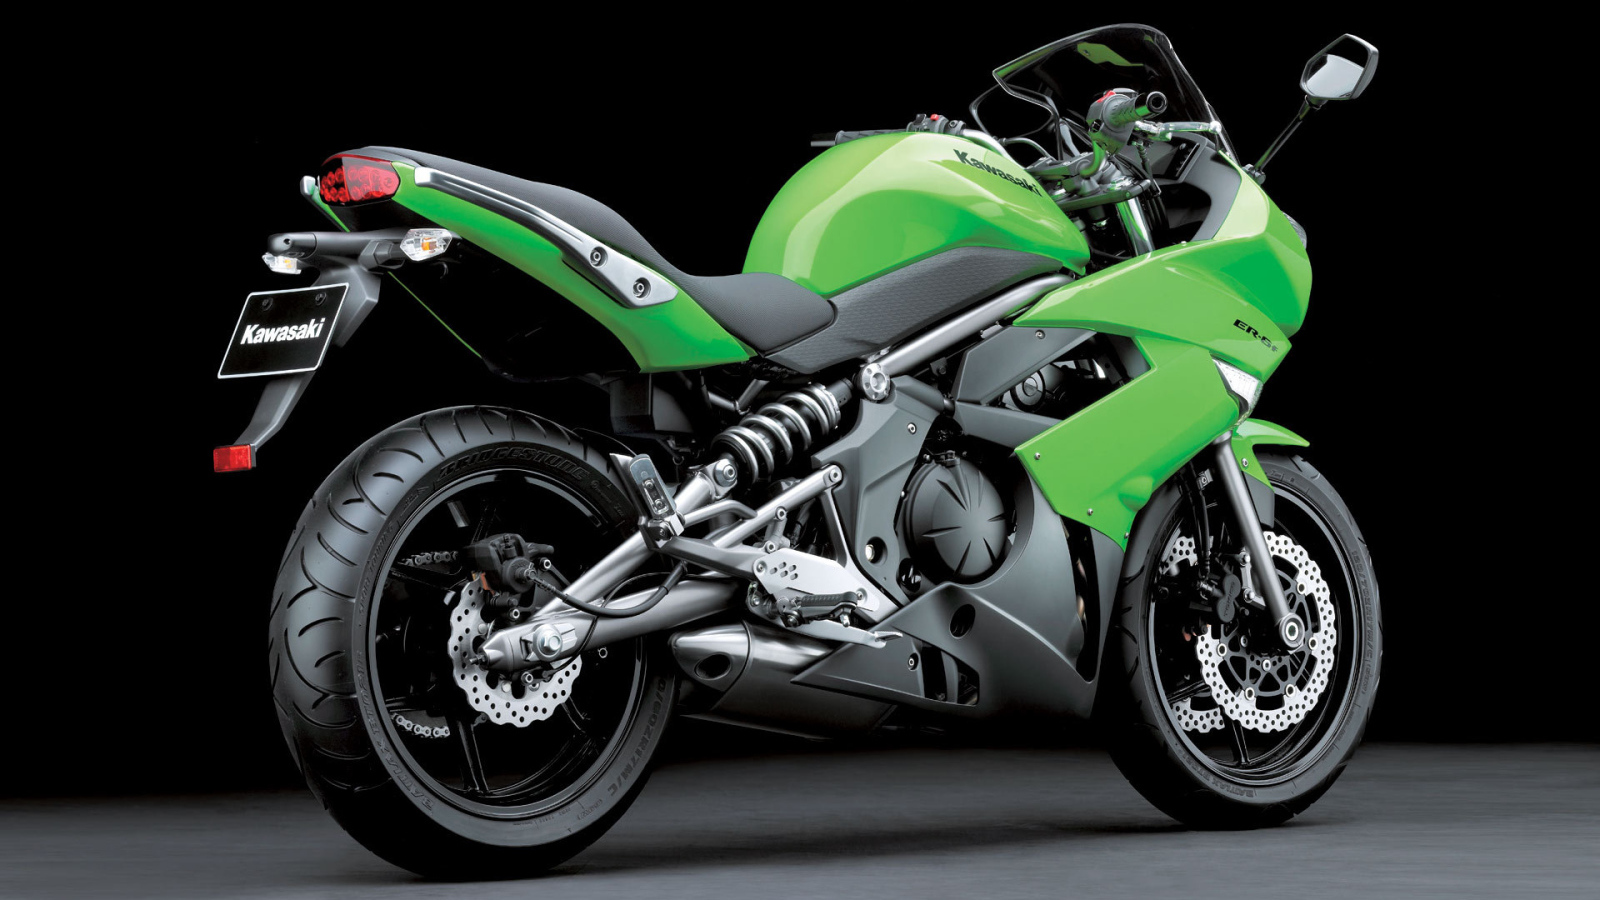 Новый надежный мотоцикл Kawasaki ER-6f